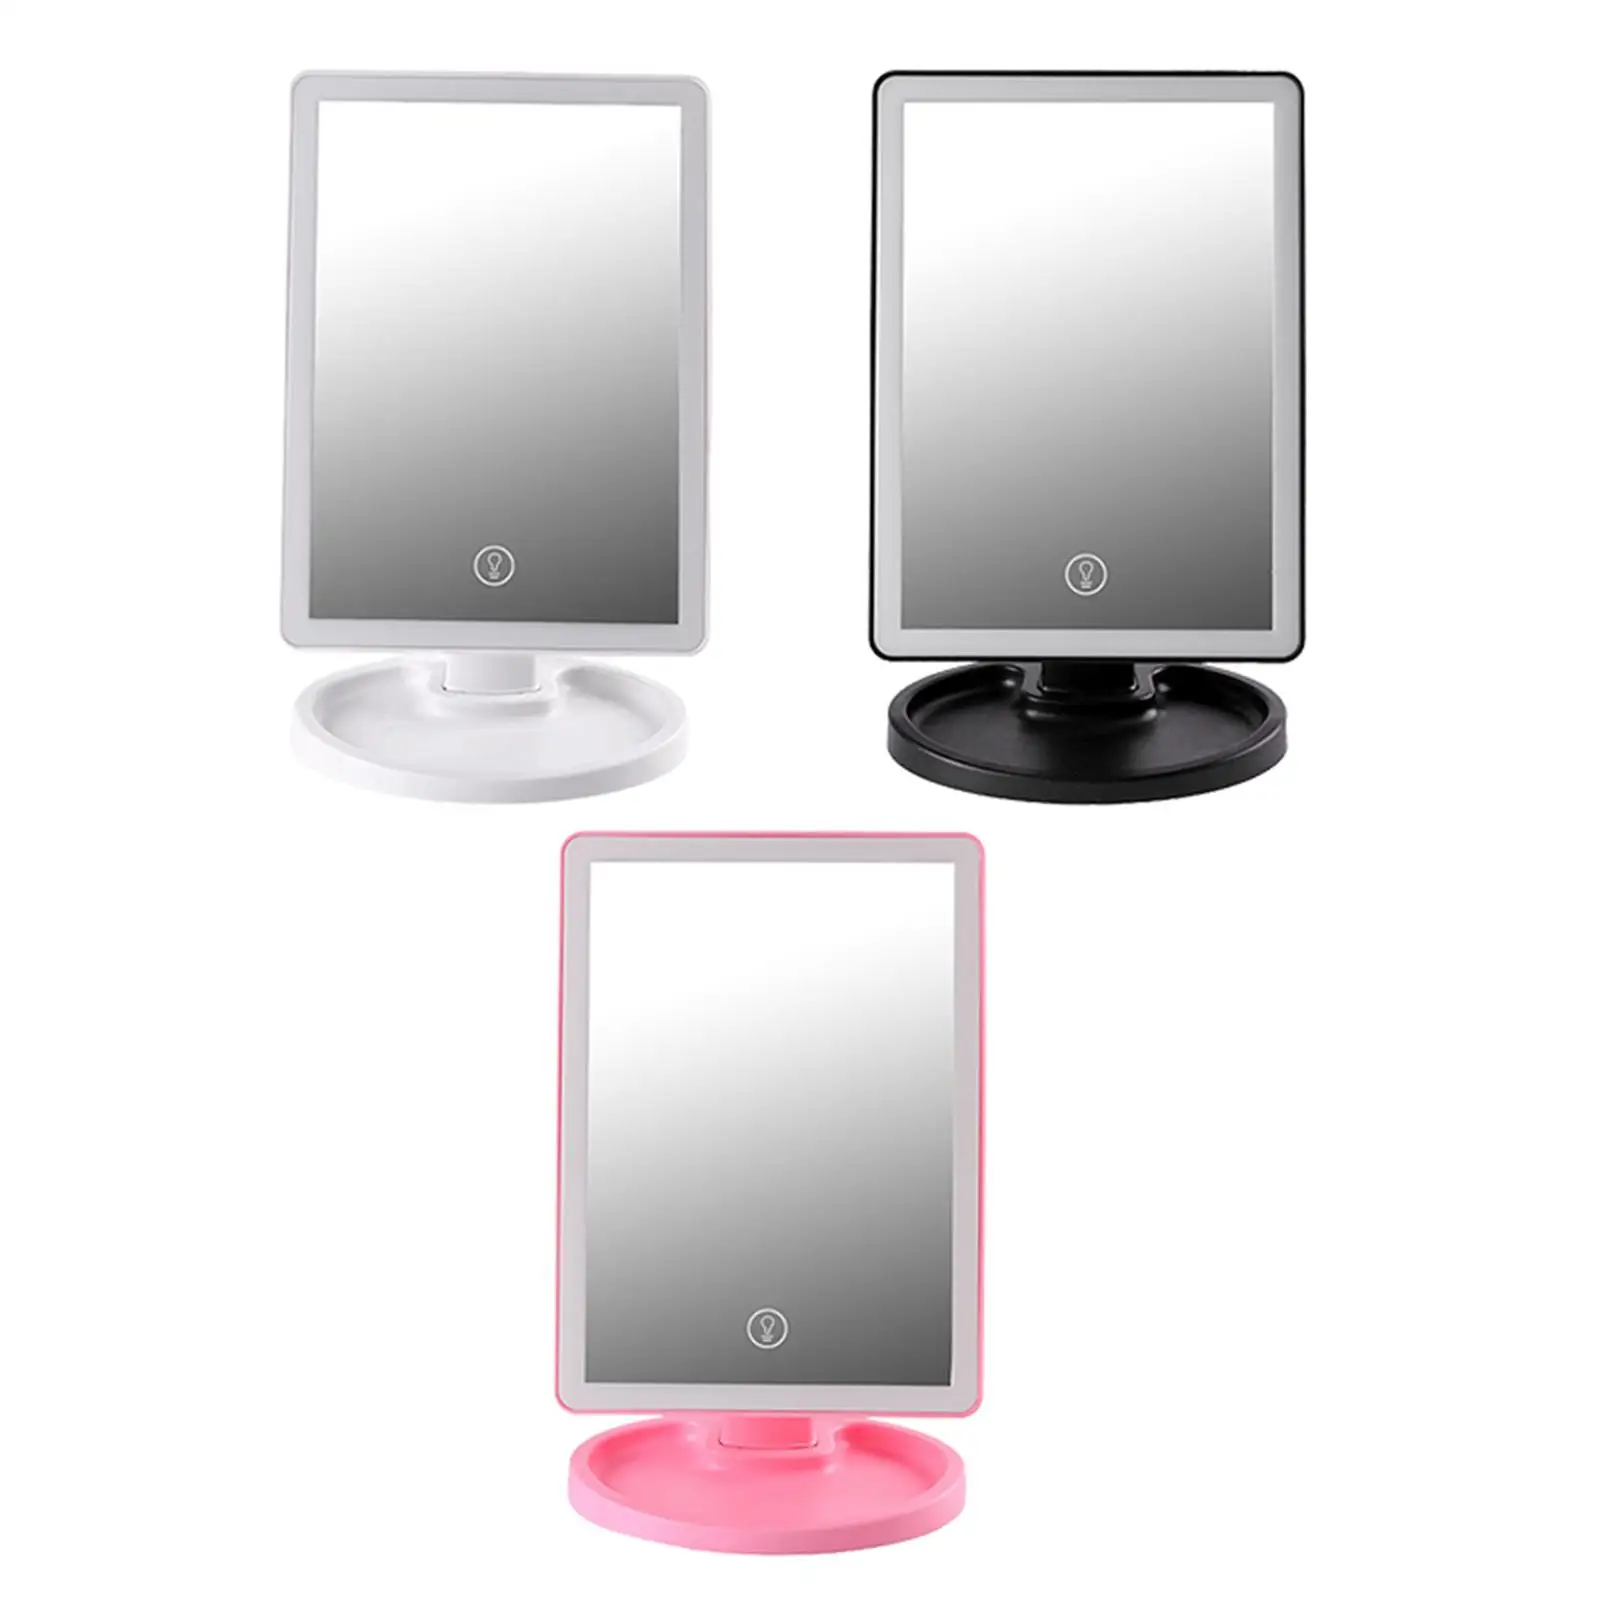 Makeup Mirror with Lights Desk Vanity Mirror Portable Illuminated Mirror for Make Up Bathroom Vanity Desk Dressing Table Girls